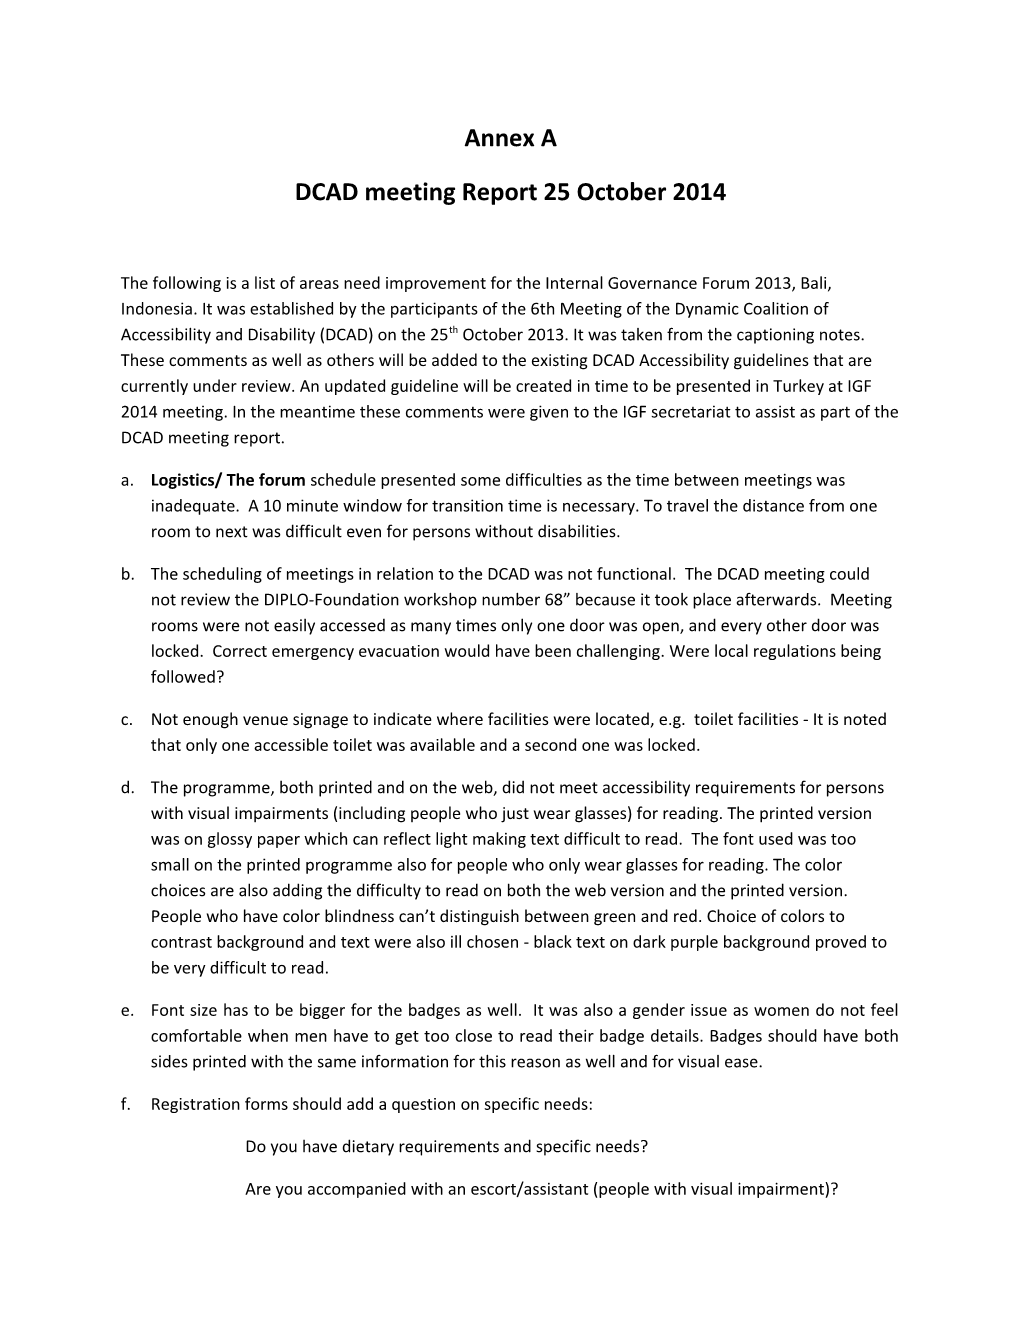 DCAD Meeting Report 25 October 2014